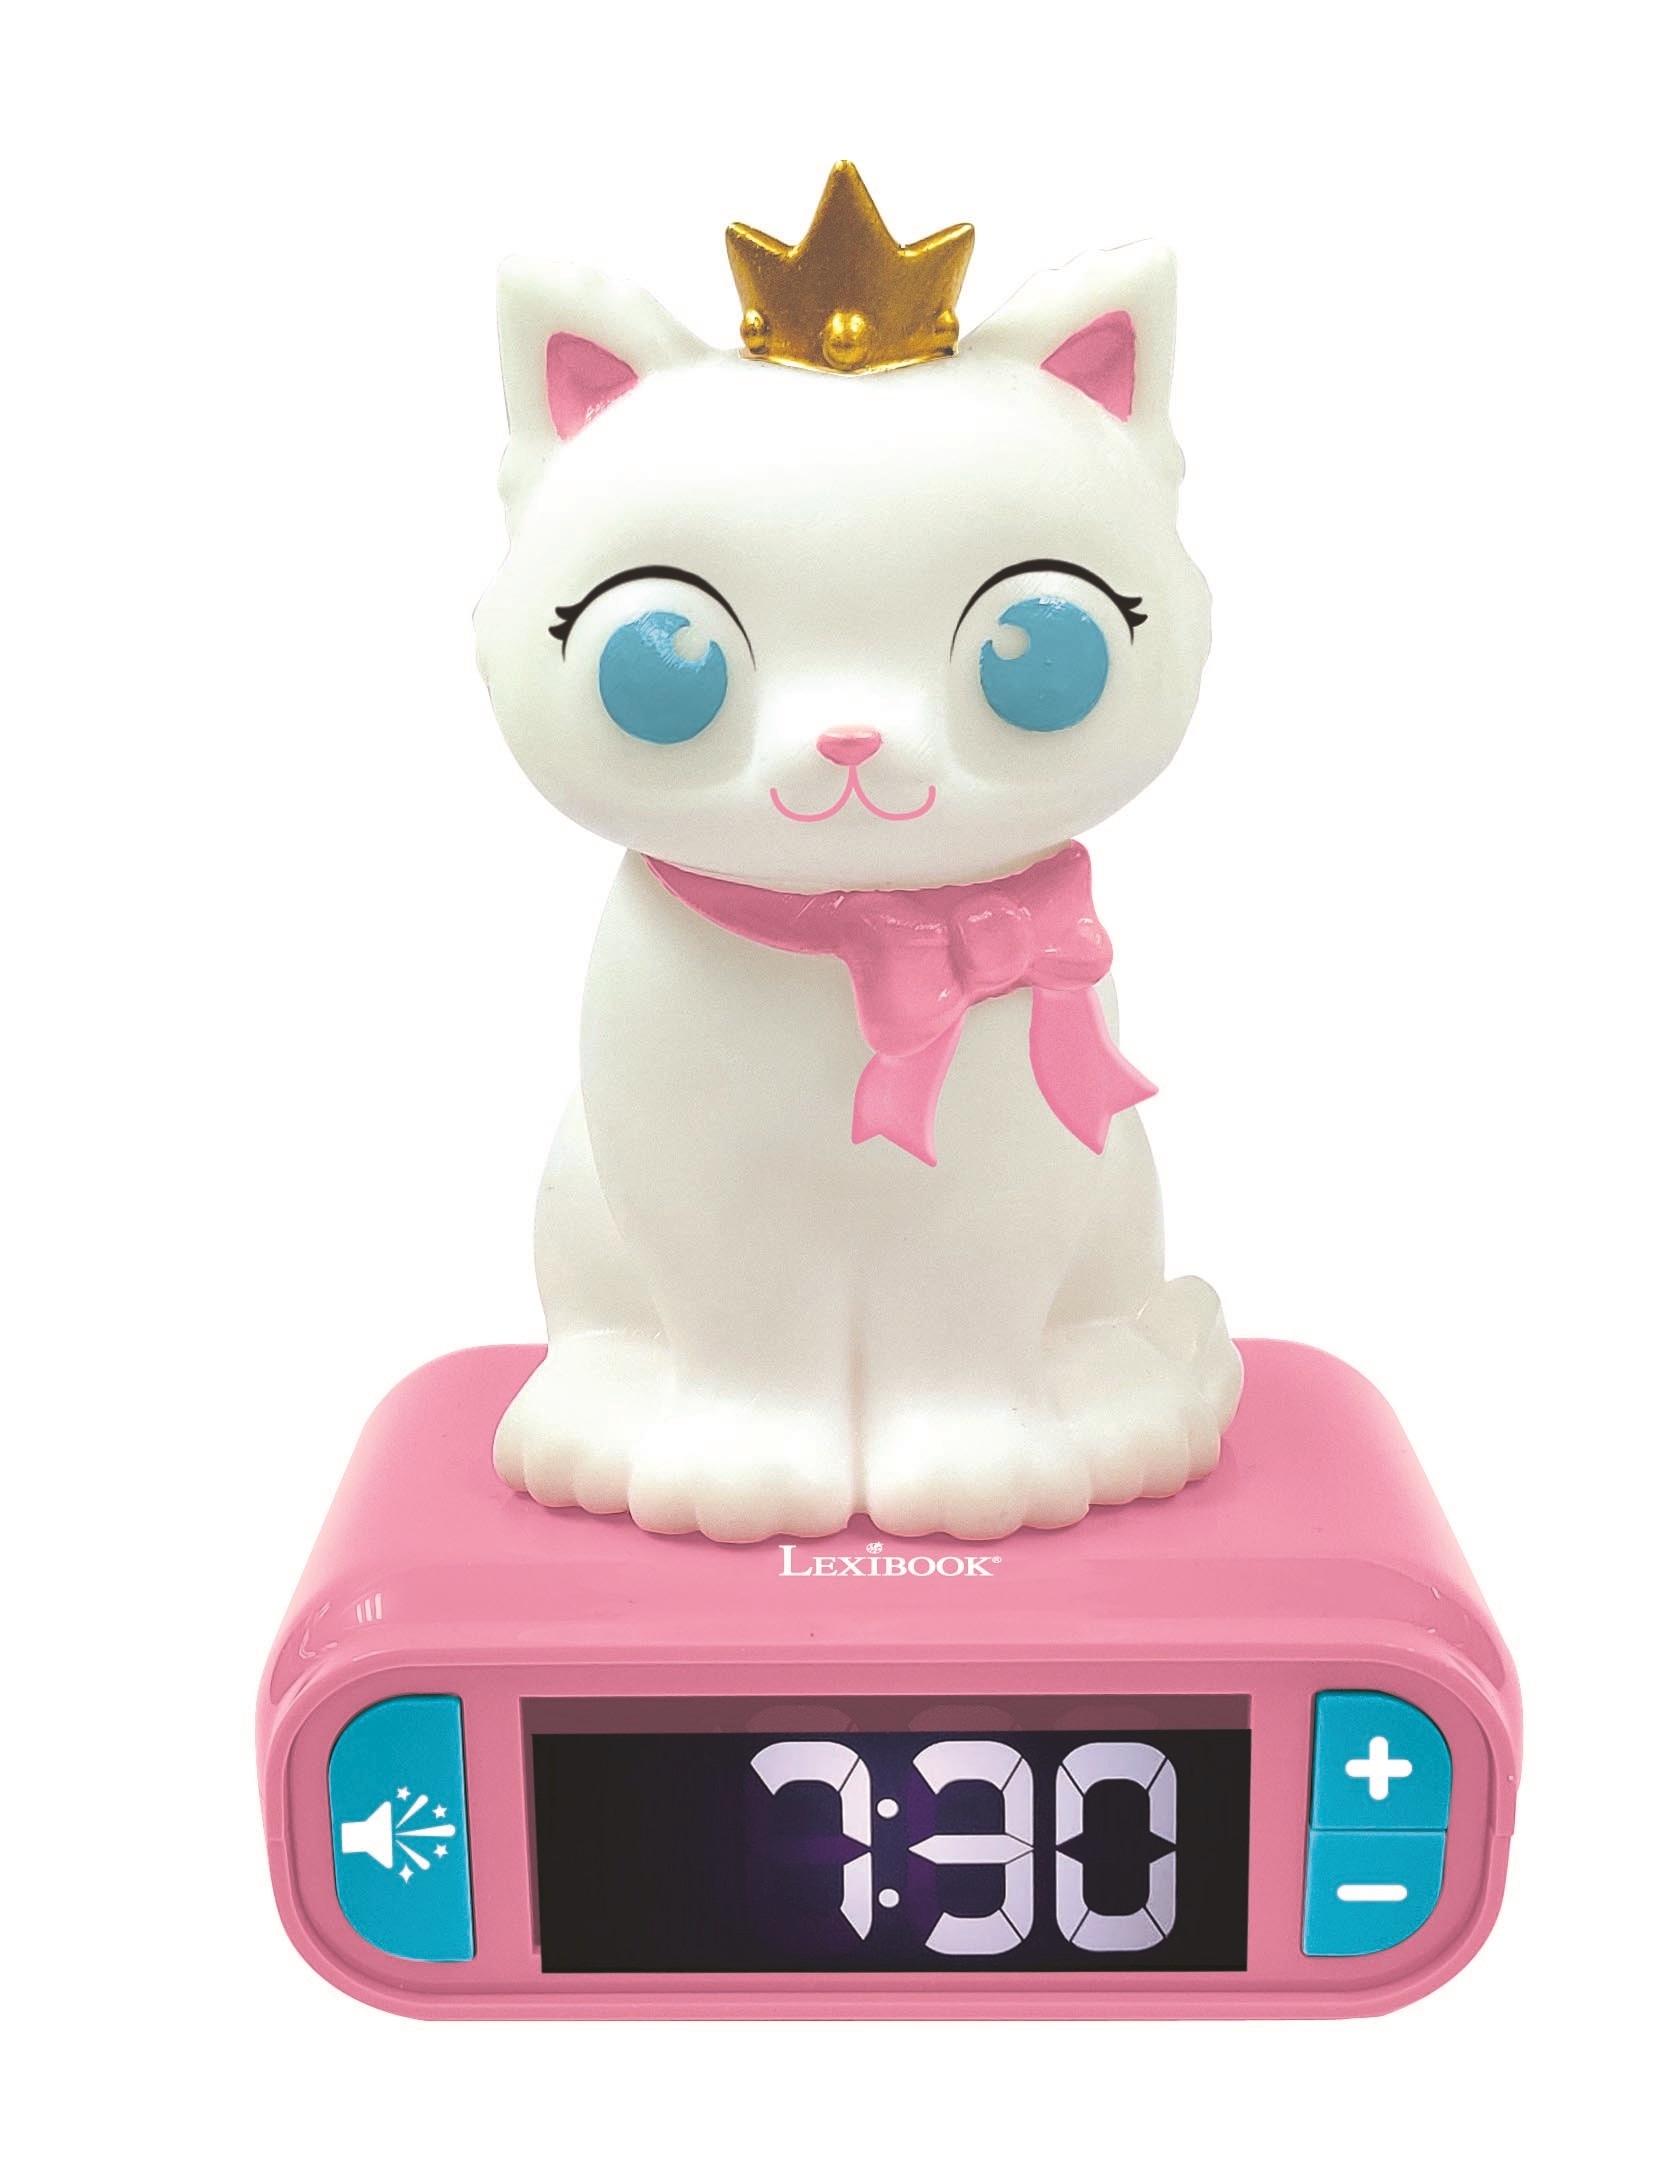 Lexibook Cat Digital Alarm Clock and Nightlight